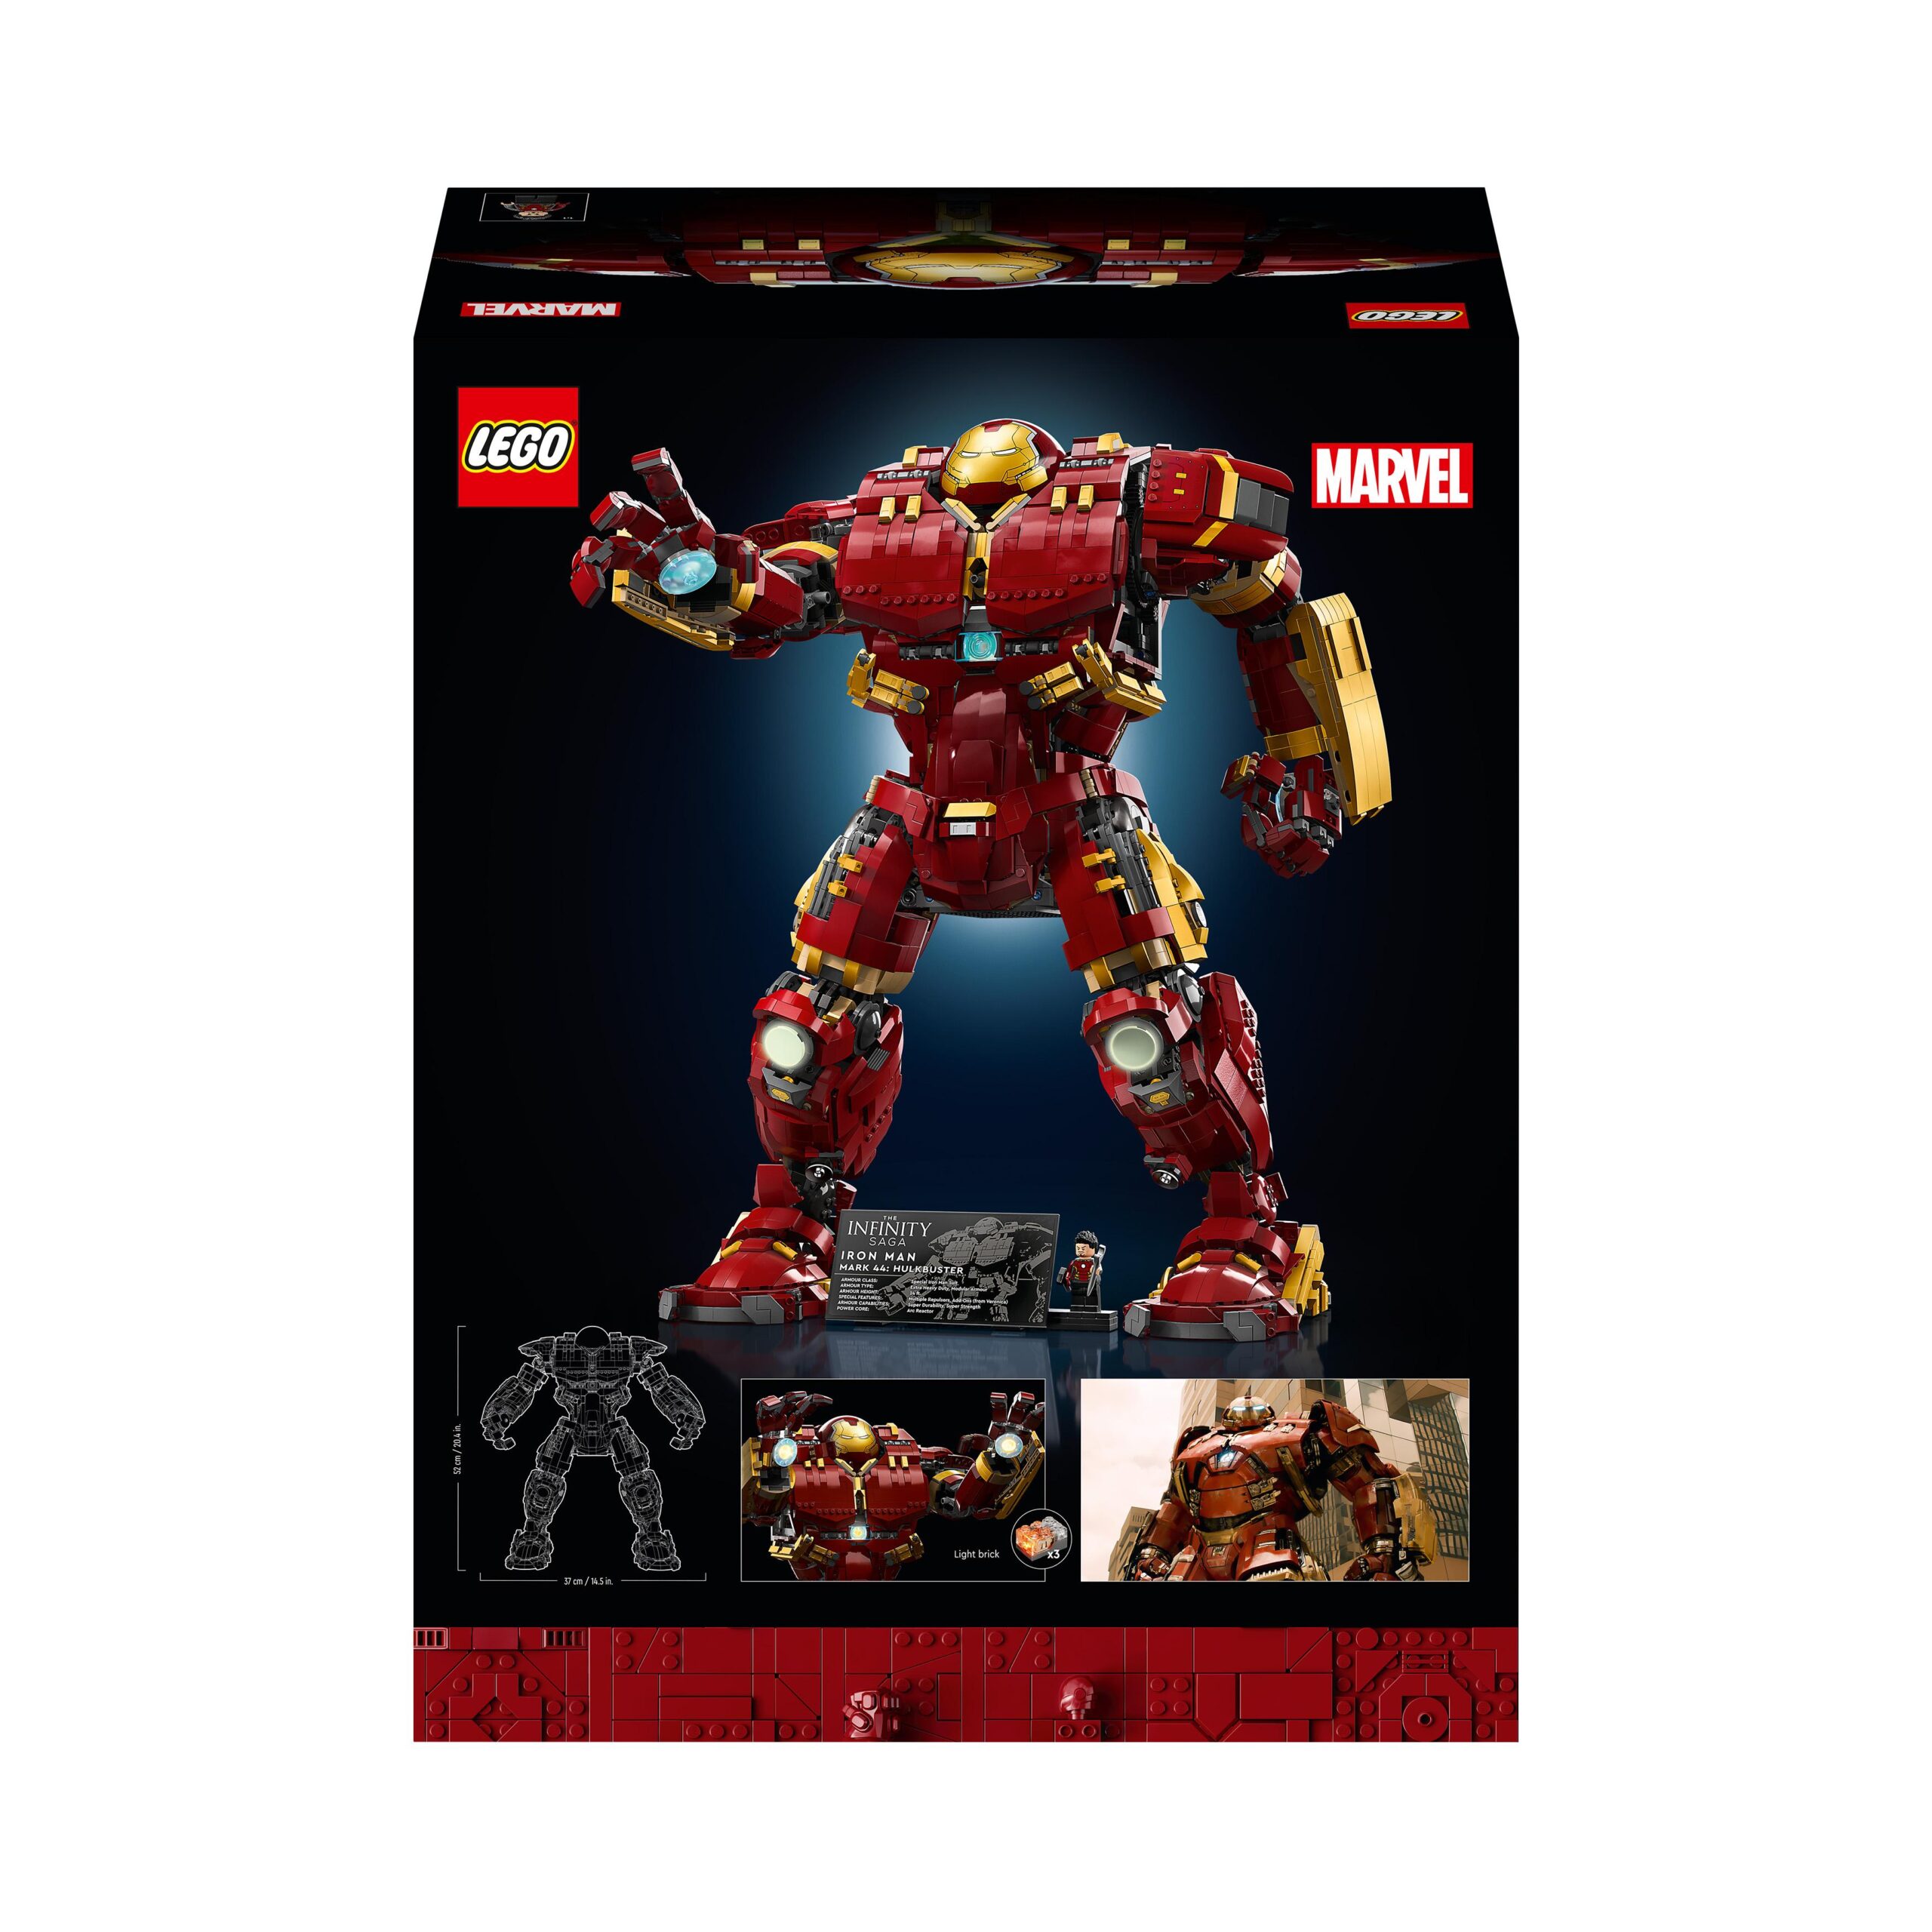 Lego marvel 76210 hulkbuster, grande mech mk44 del supereroe iron man da avengers age of ultron con minifigure di tony stark - LEGO SUPER HEROES, Avengers